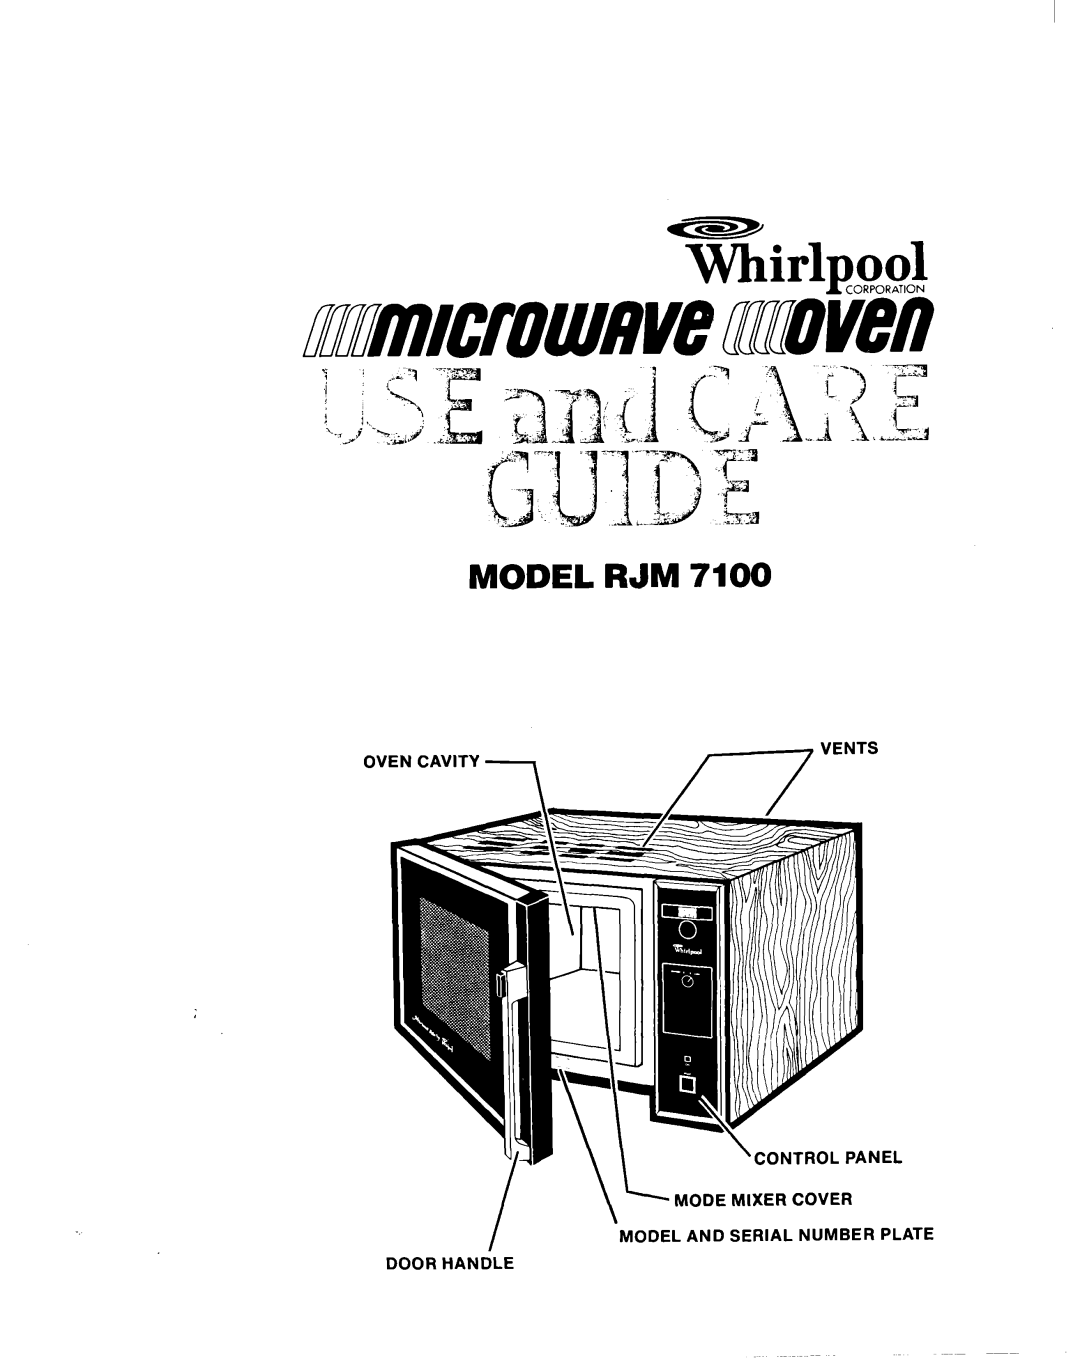 Whirlpool RJM 7100 manual Model Rjm, OVEN CAVITY 7 I’ DOOR HANDLE, Nel Mode Mixer Cover, Model And Serial Number Plate 